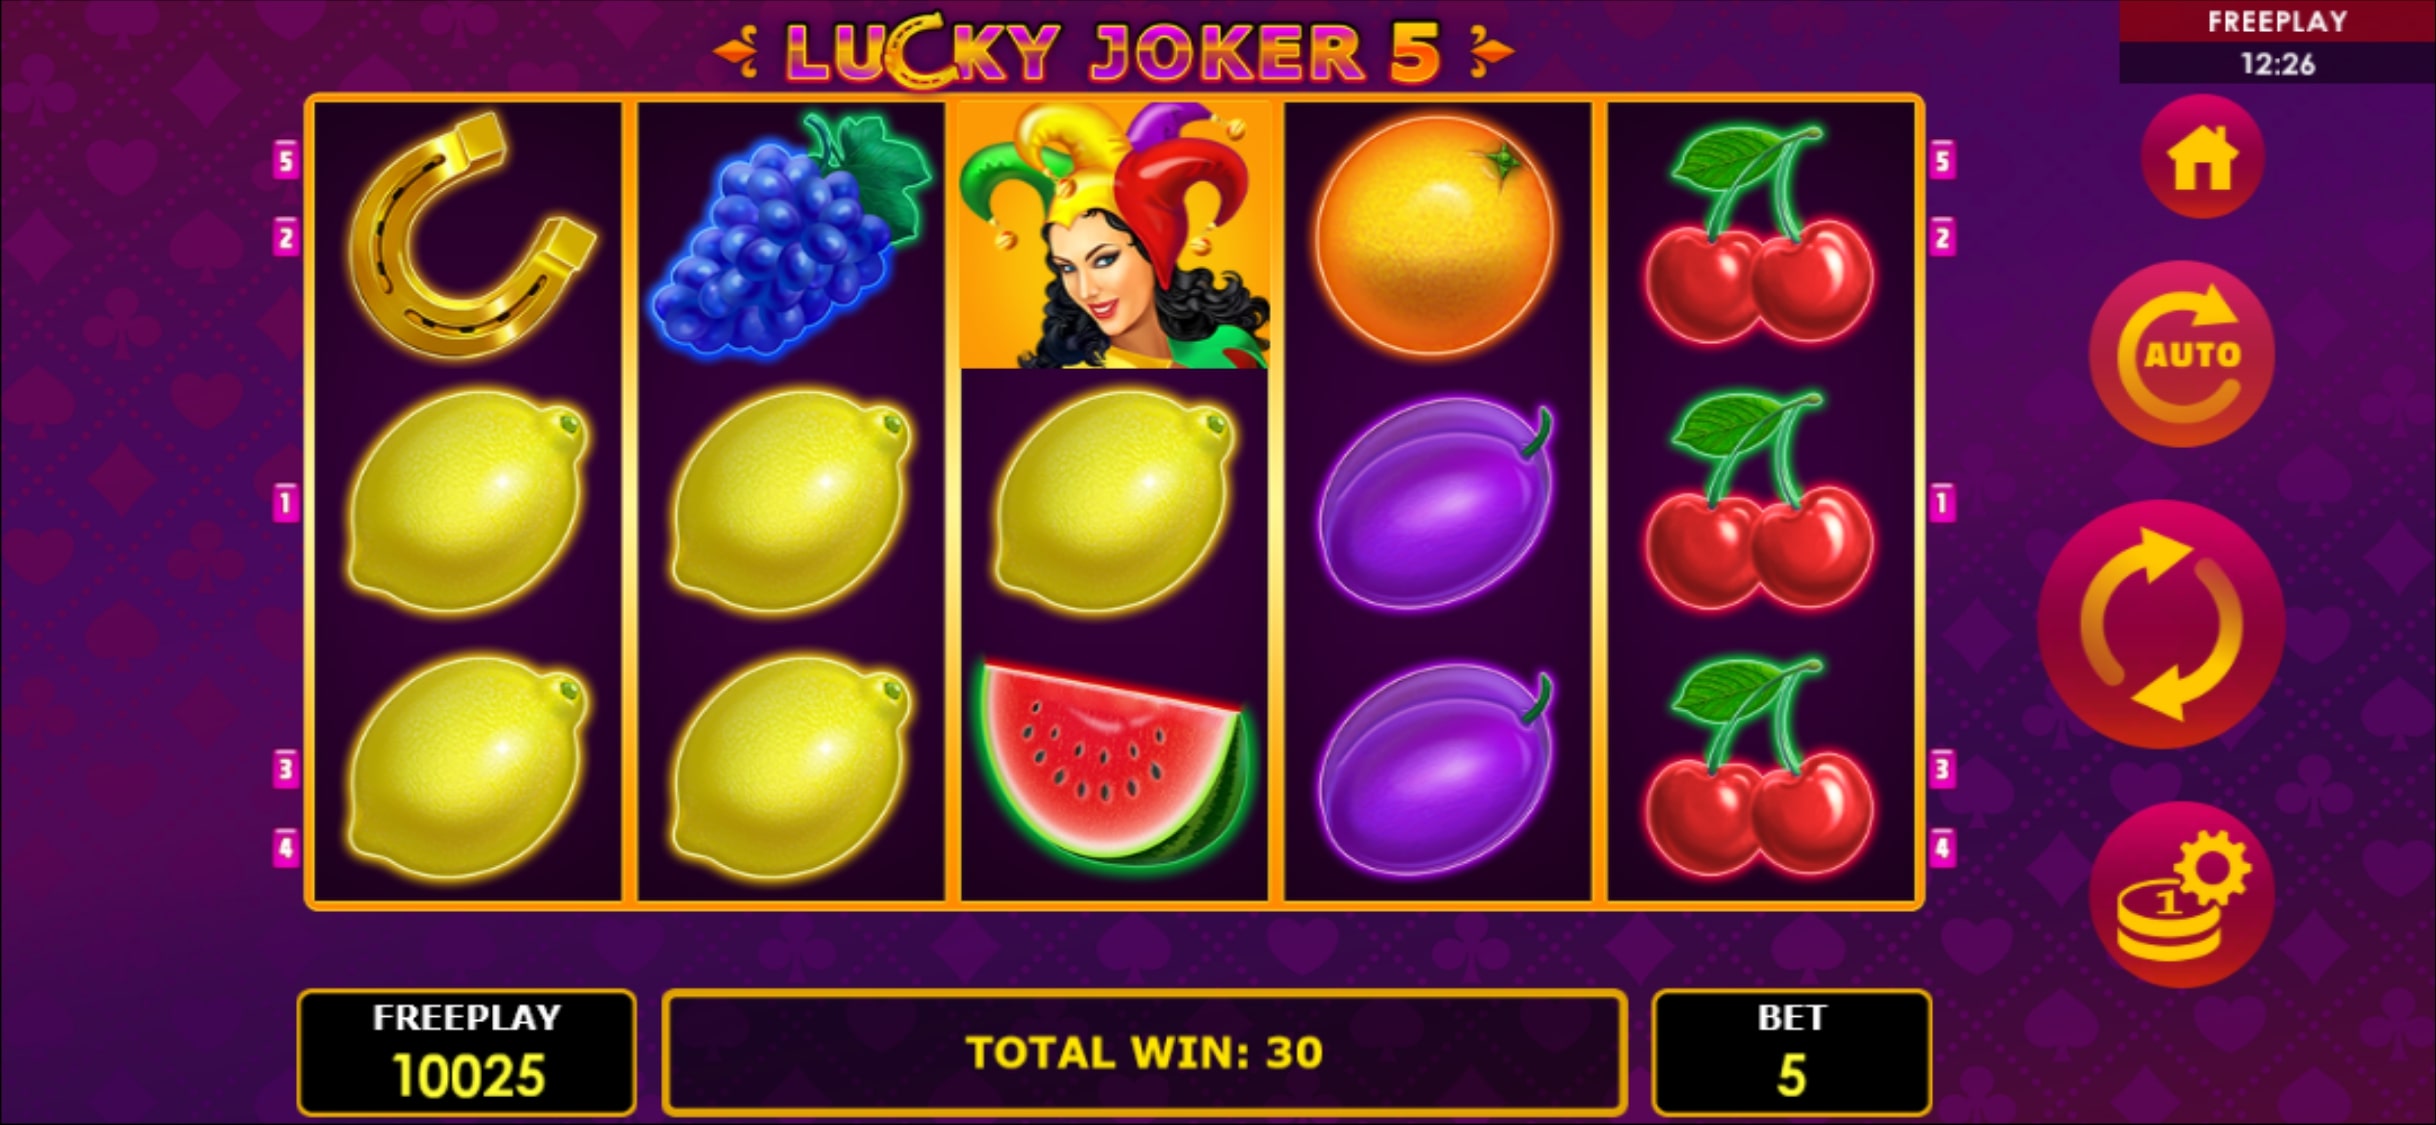 Hyper Casino Mobile Slot Games Review